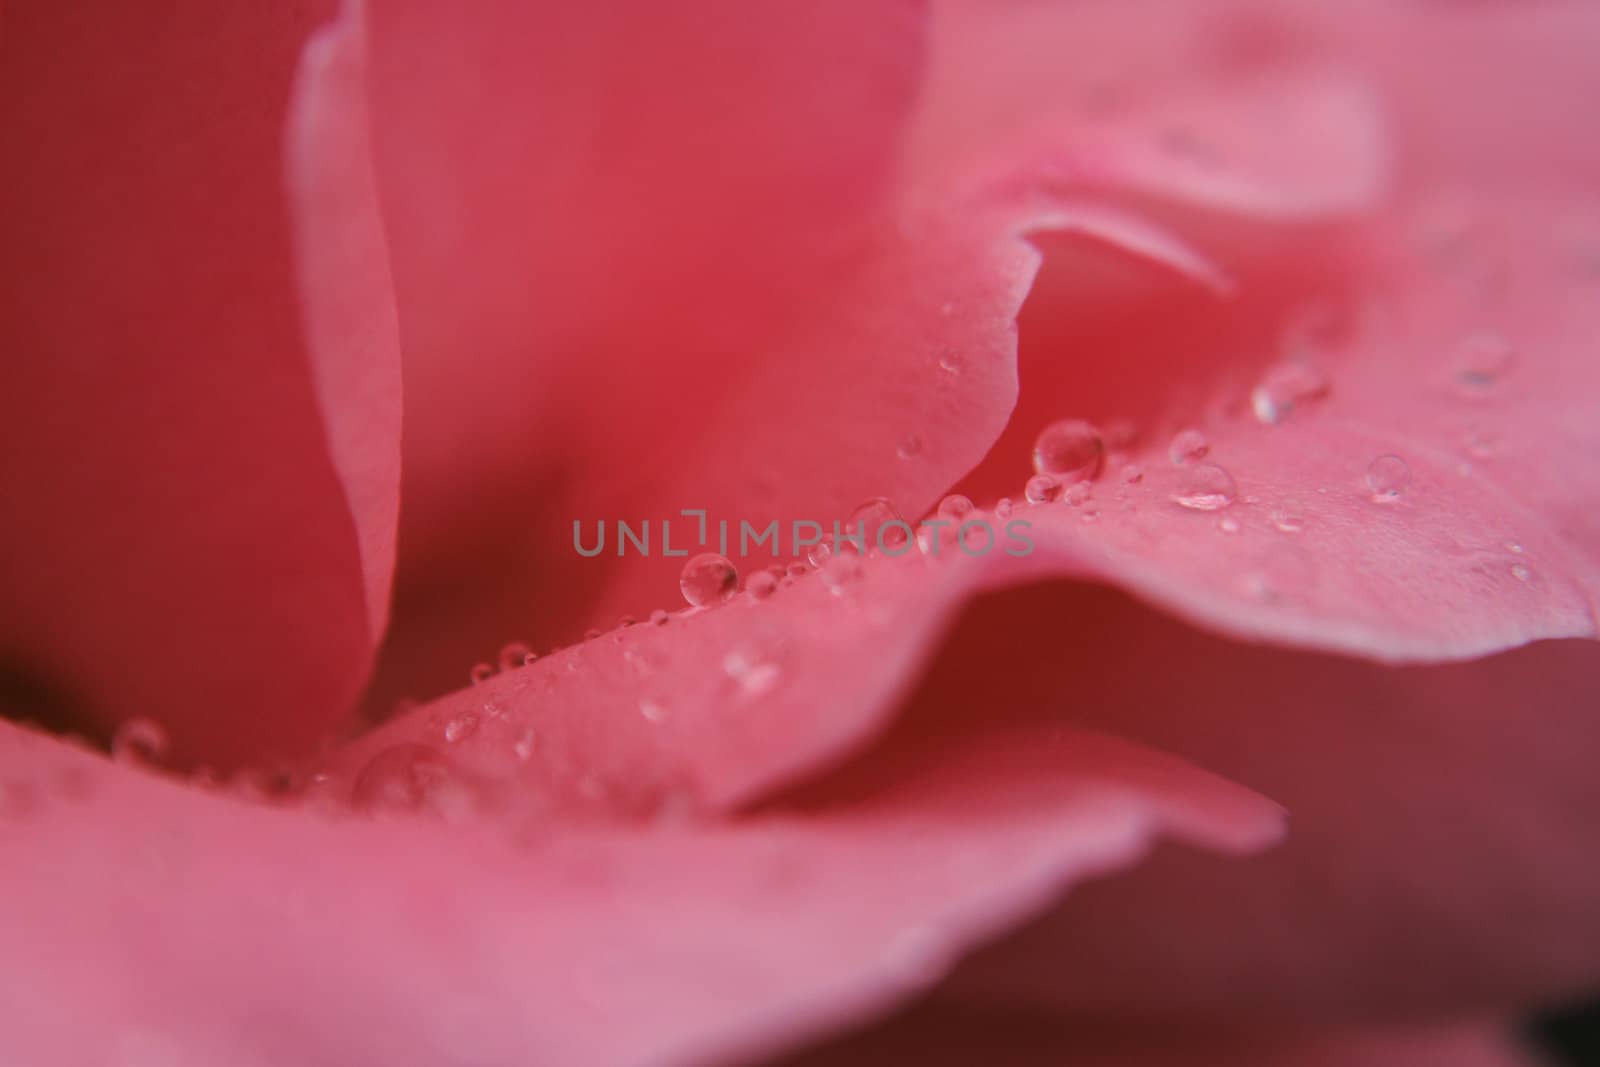 rose detail with water drops  by jonnysek